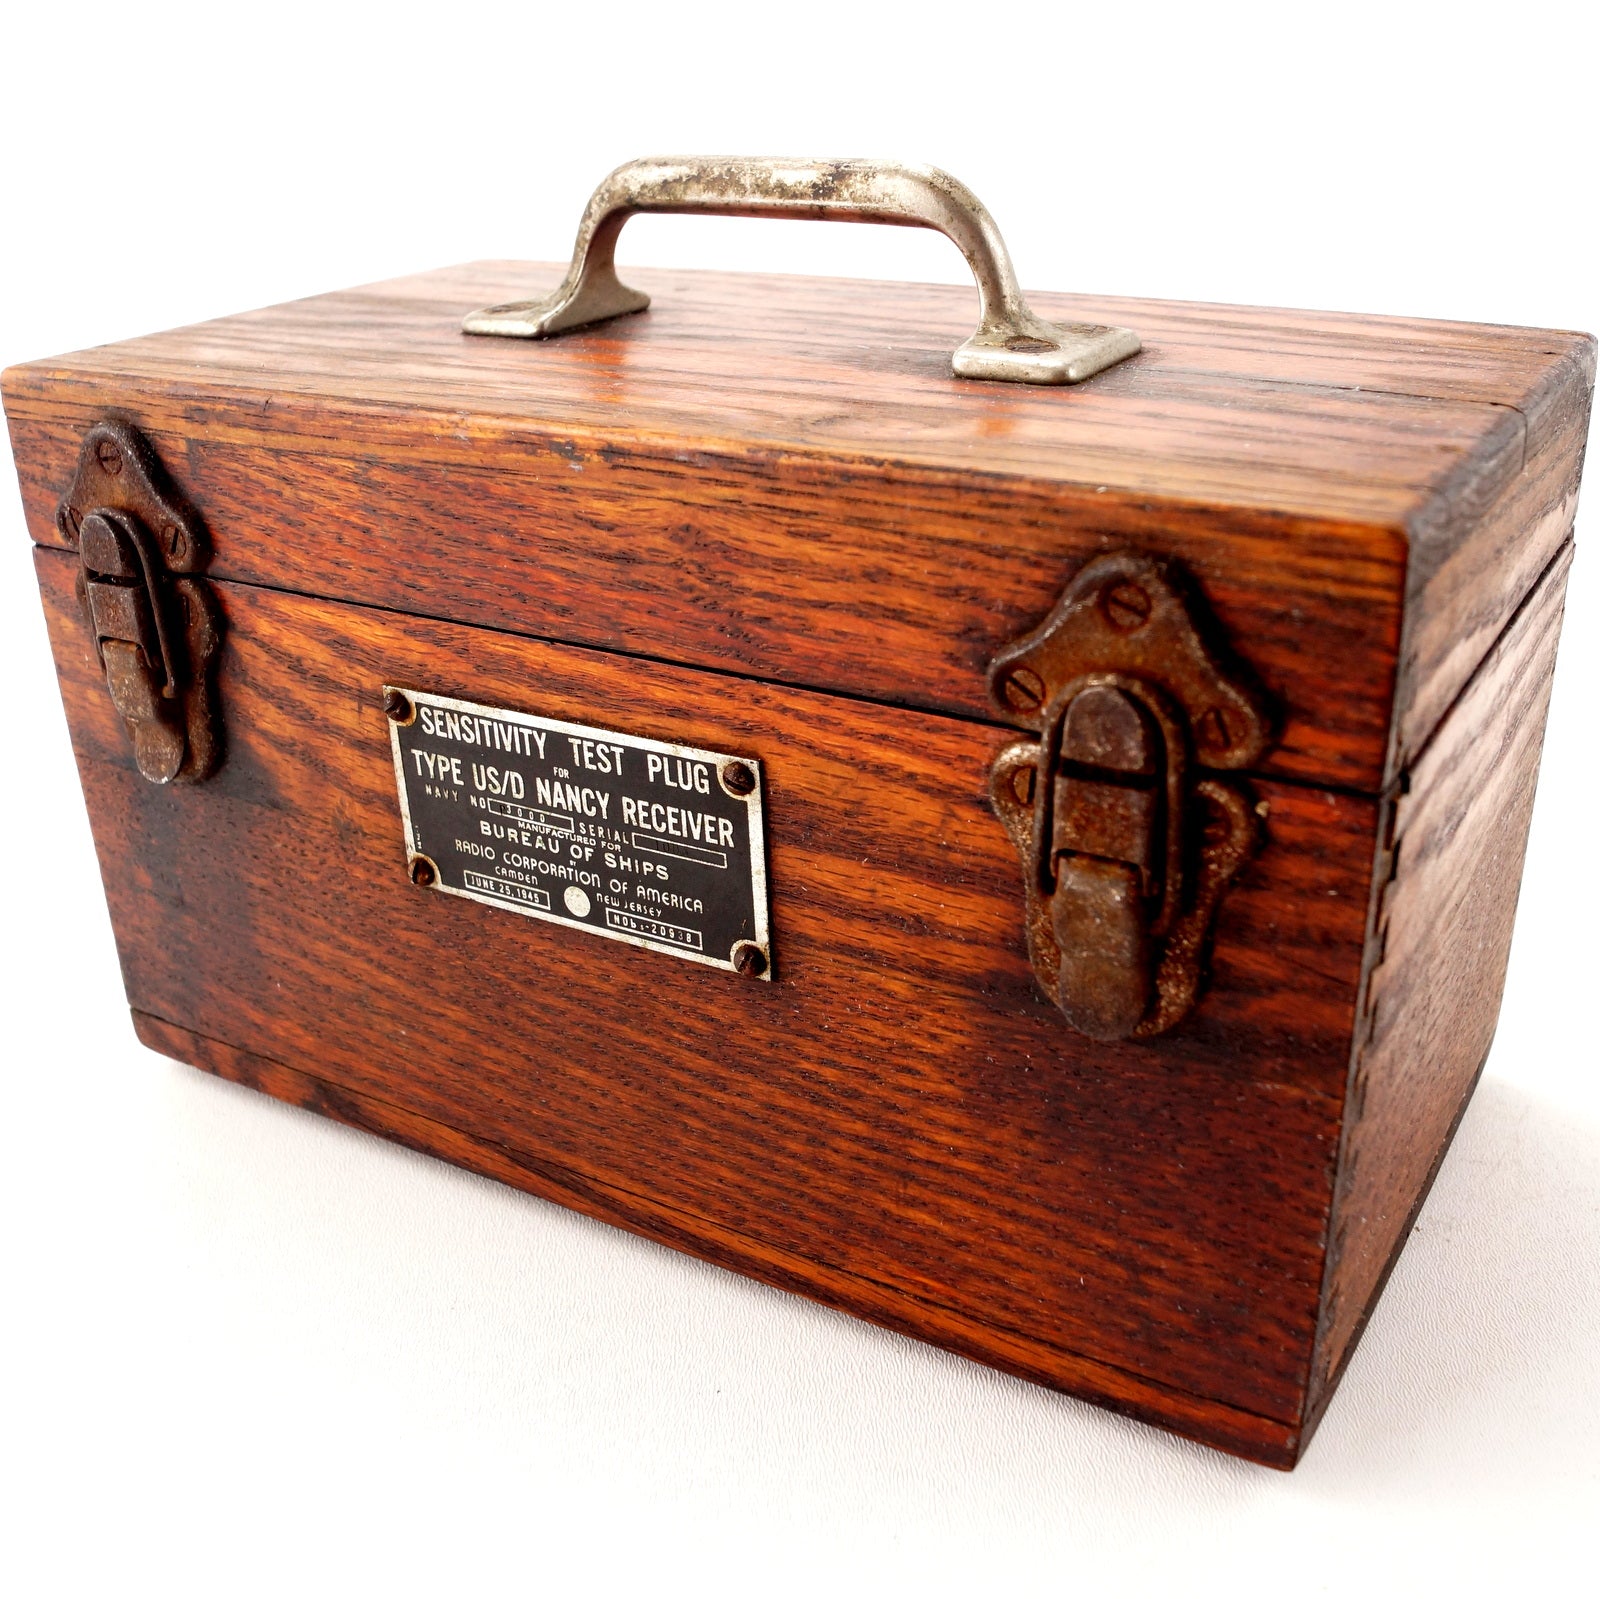 Armoedig Verplicht Opa Vintage Wood Box with Lid, Handle and Metal Label Plate, Navy Bureau o –  ThirdShiftVintage.com